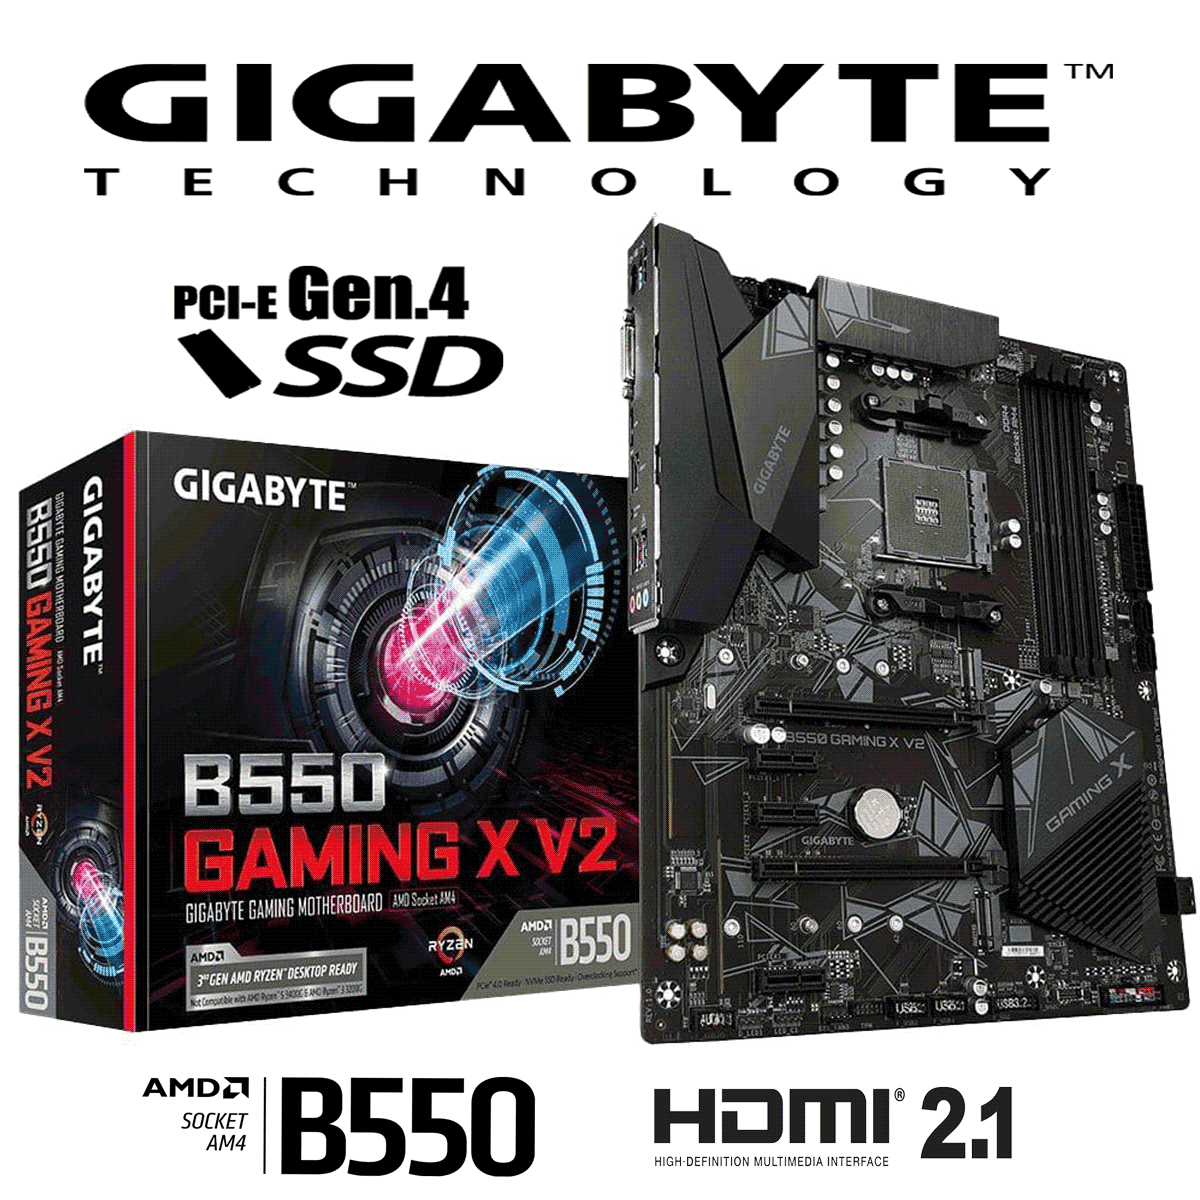 PC Bundle • AMD Ryzen 5 5600X • GIGABYTE B550 Gaming X V2 • 16GB DDR4-3200 Ram